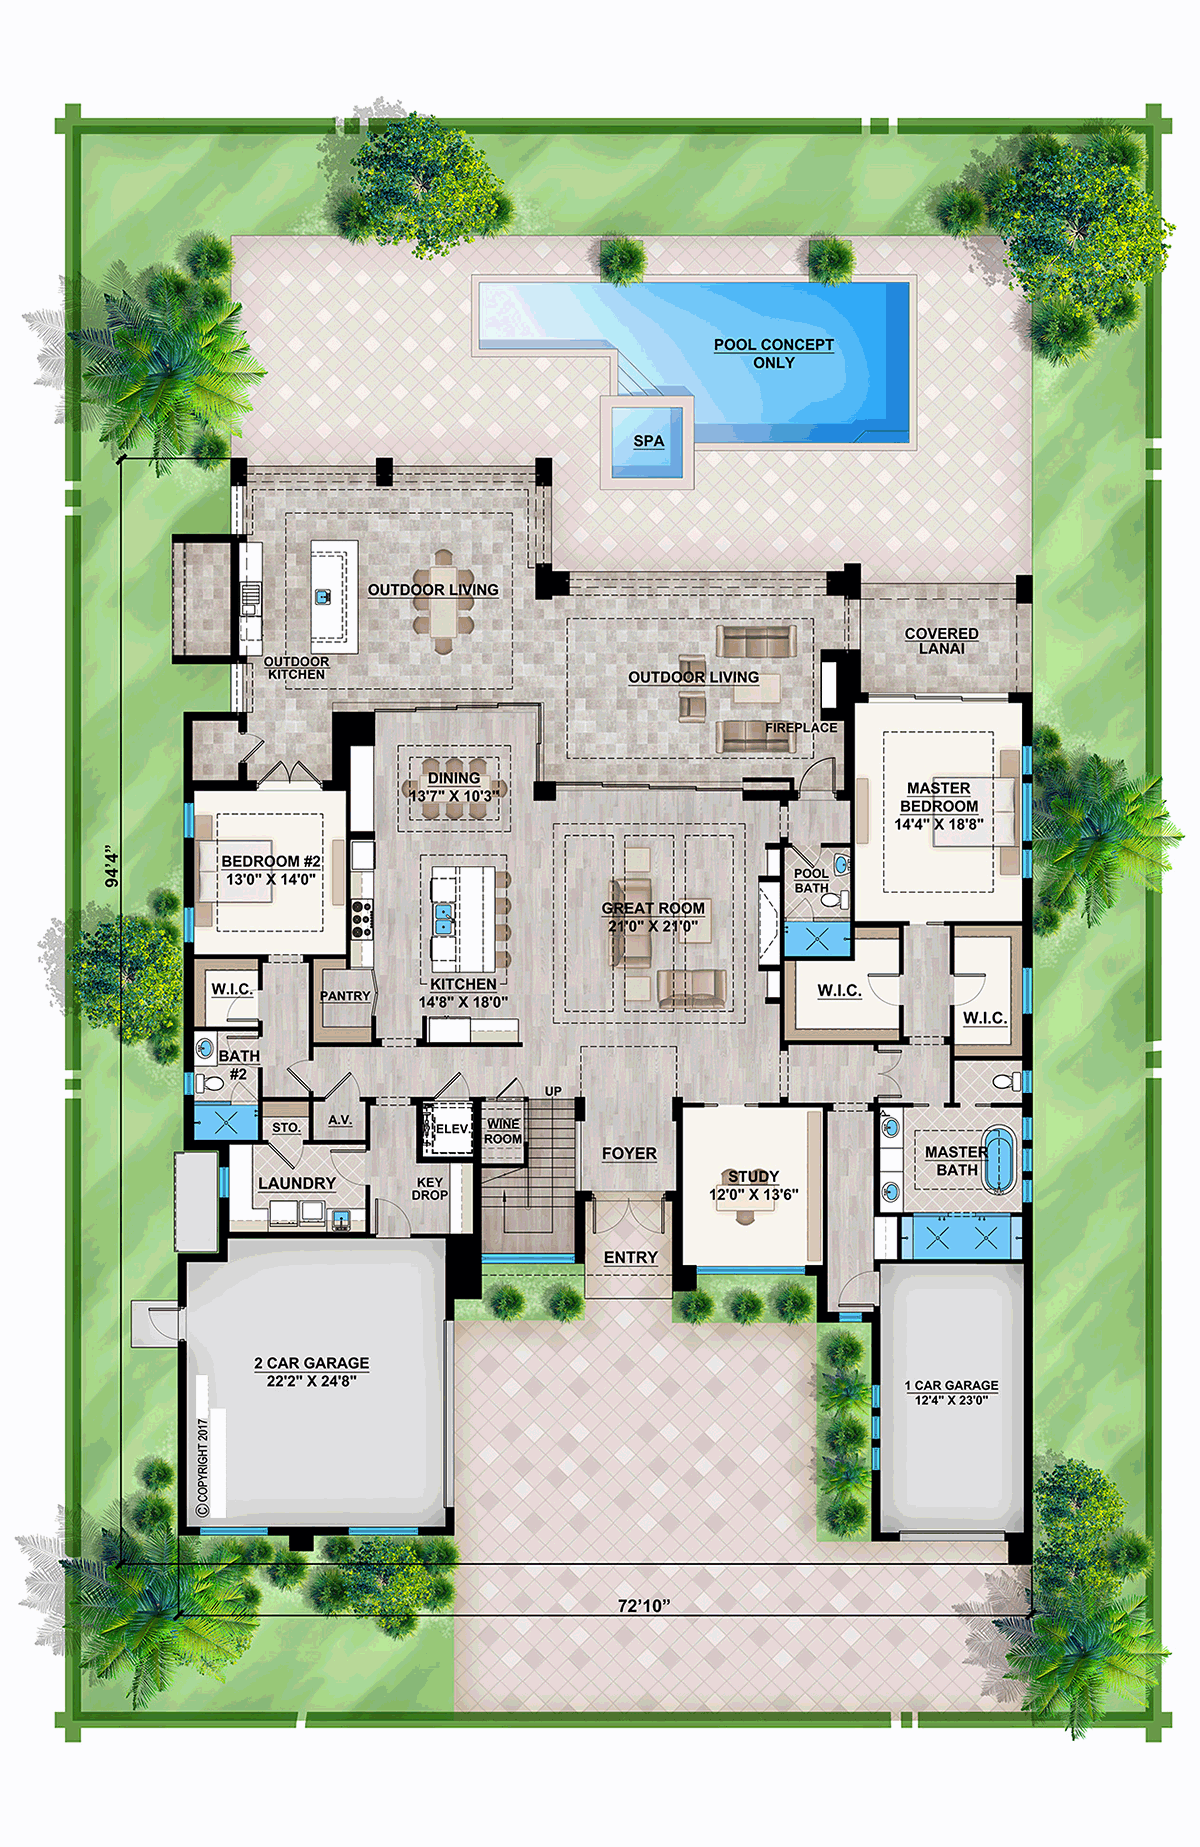 Modern Style House Plan 52957 With 4 Bed 5 Bath 3 Car Garage